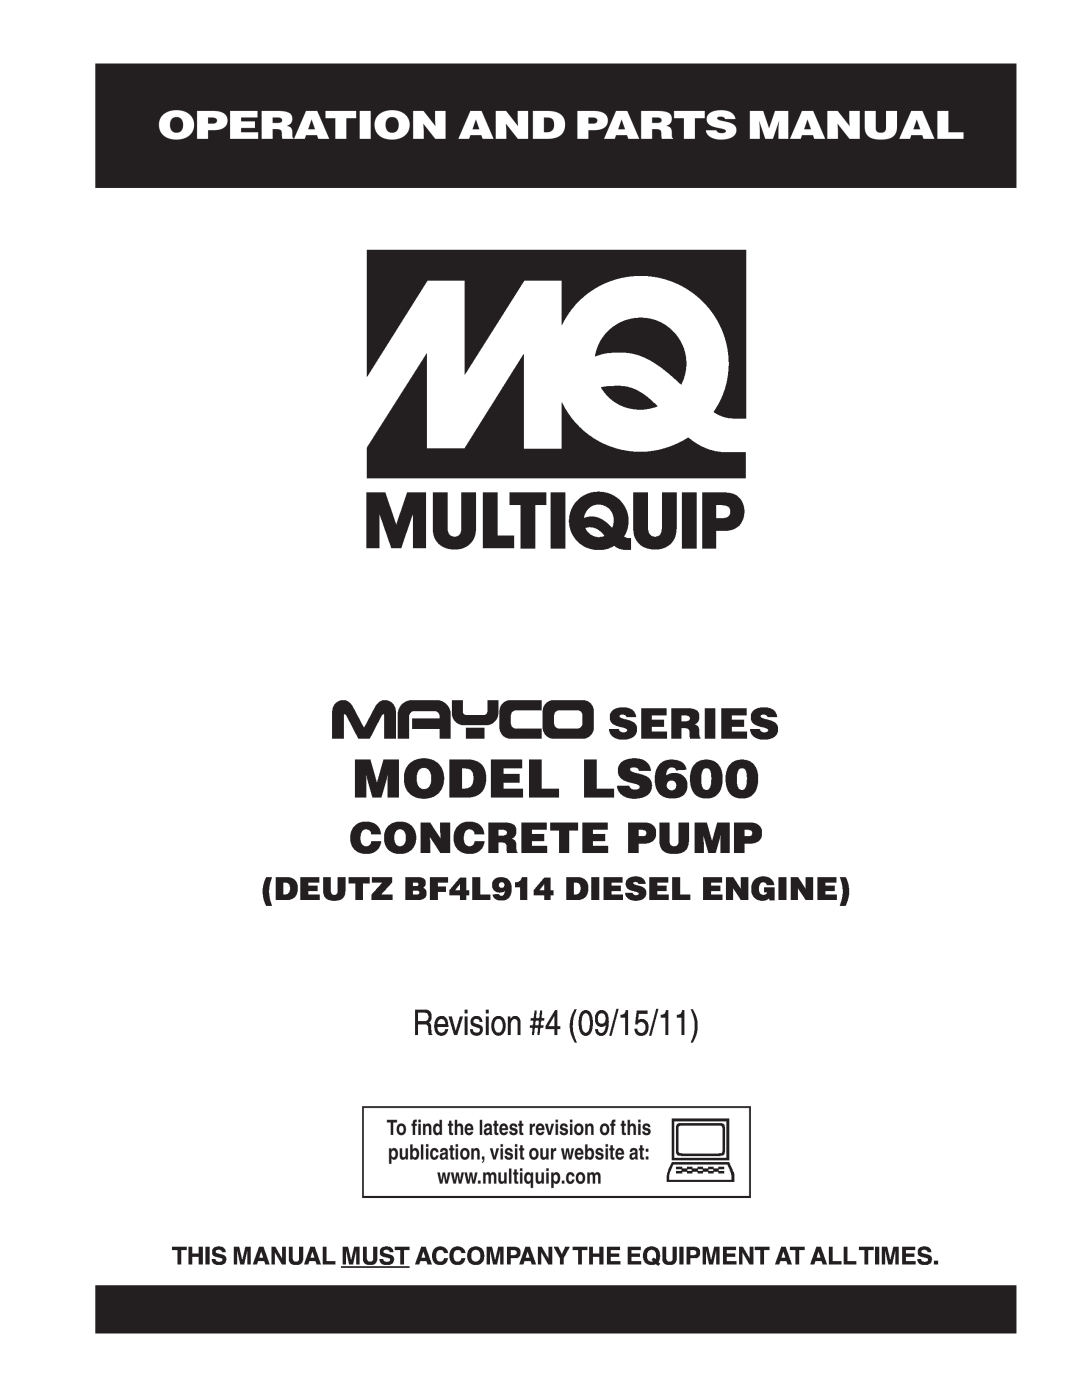 Multiquip manual Operation And Parts Manual, MODEL LS600, Series, Concrete Pump, Revision #4 09/15/11 